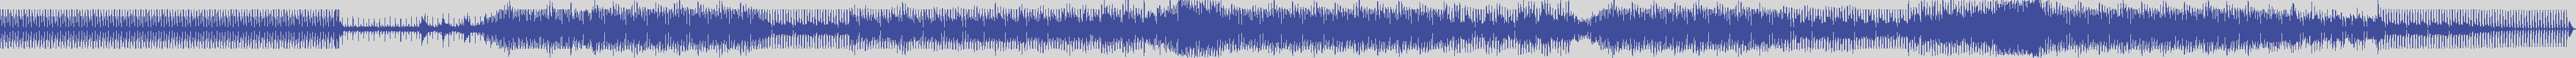 airplane_records [ARP1045] Christian Hornbostel - Wanna Fly Away [Moltosugo Club Mix] audio wave form